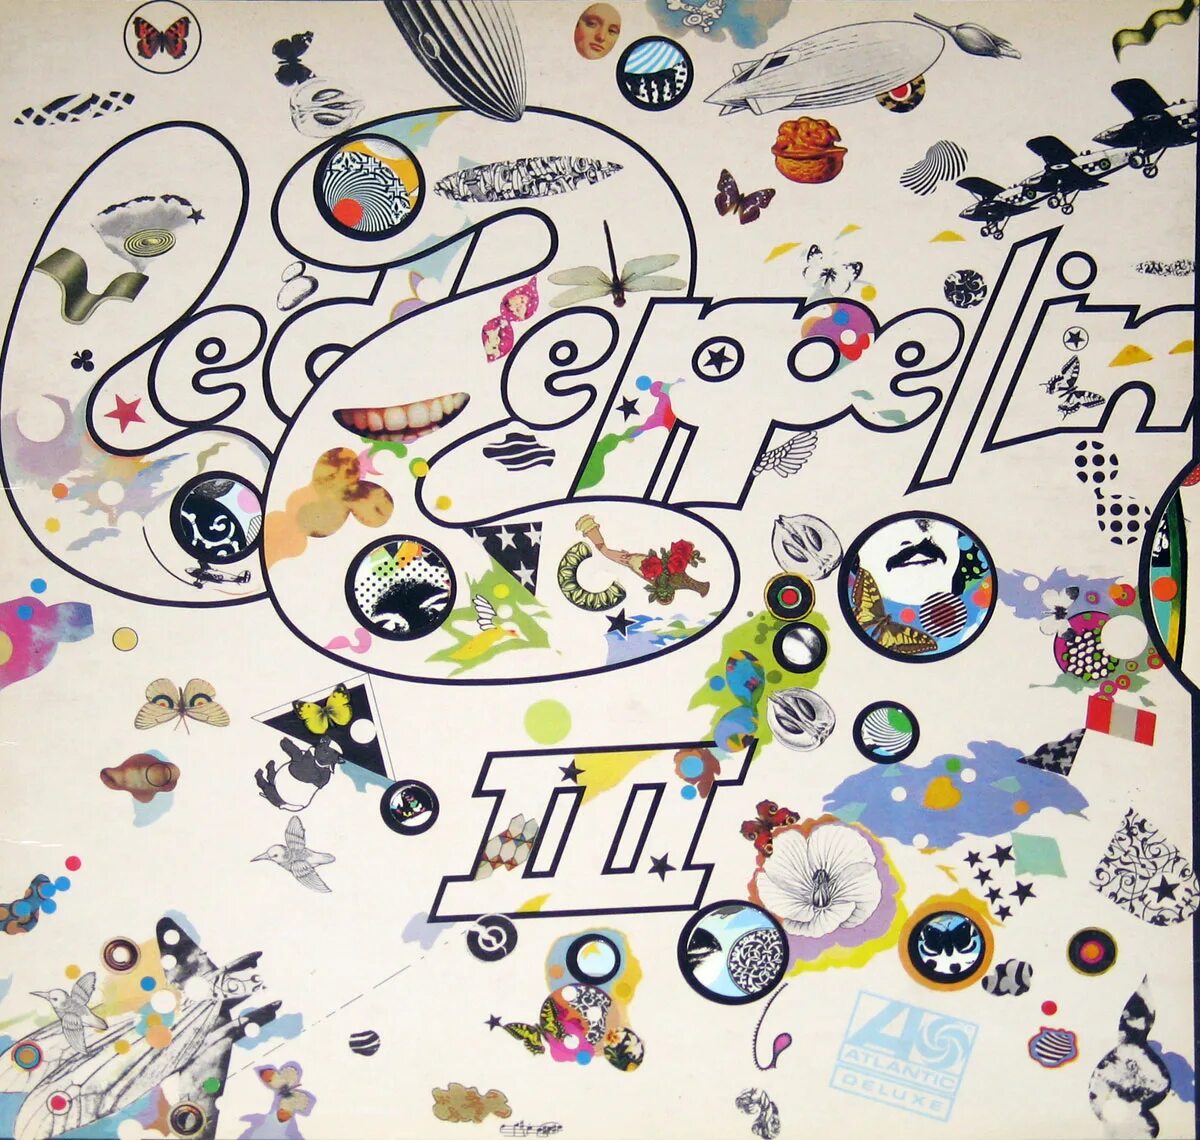 Лед 3 кавер. Led Zeppelin III - 1970. 1970 Led Zeppelin III обложка. Led Zeppelin "led Zeppelin 3". Led Zeppelin led Zeppelin III обложка.